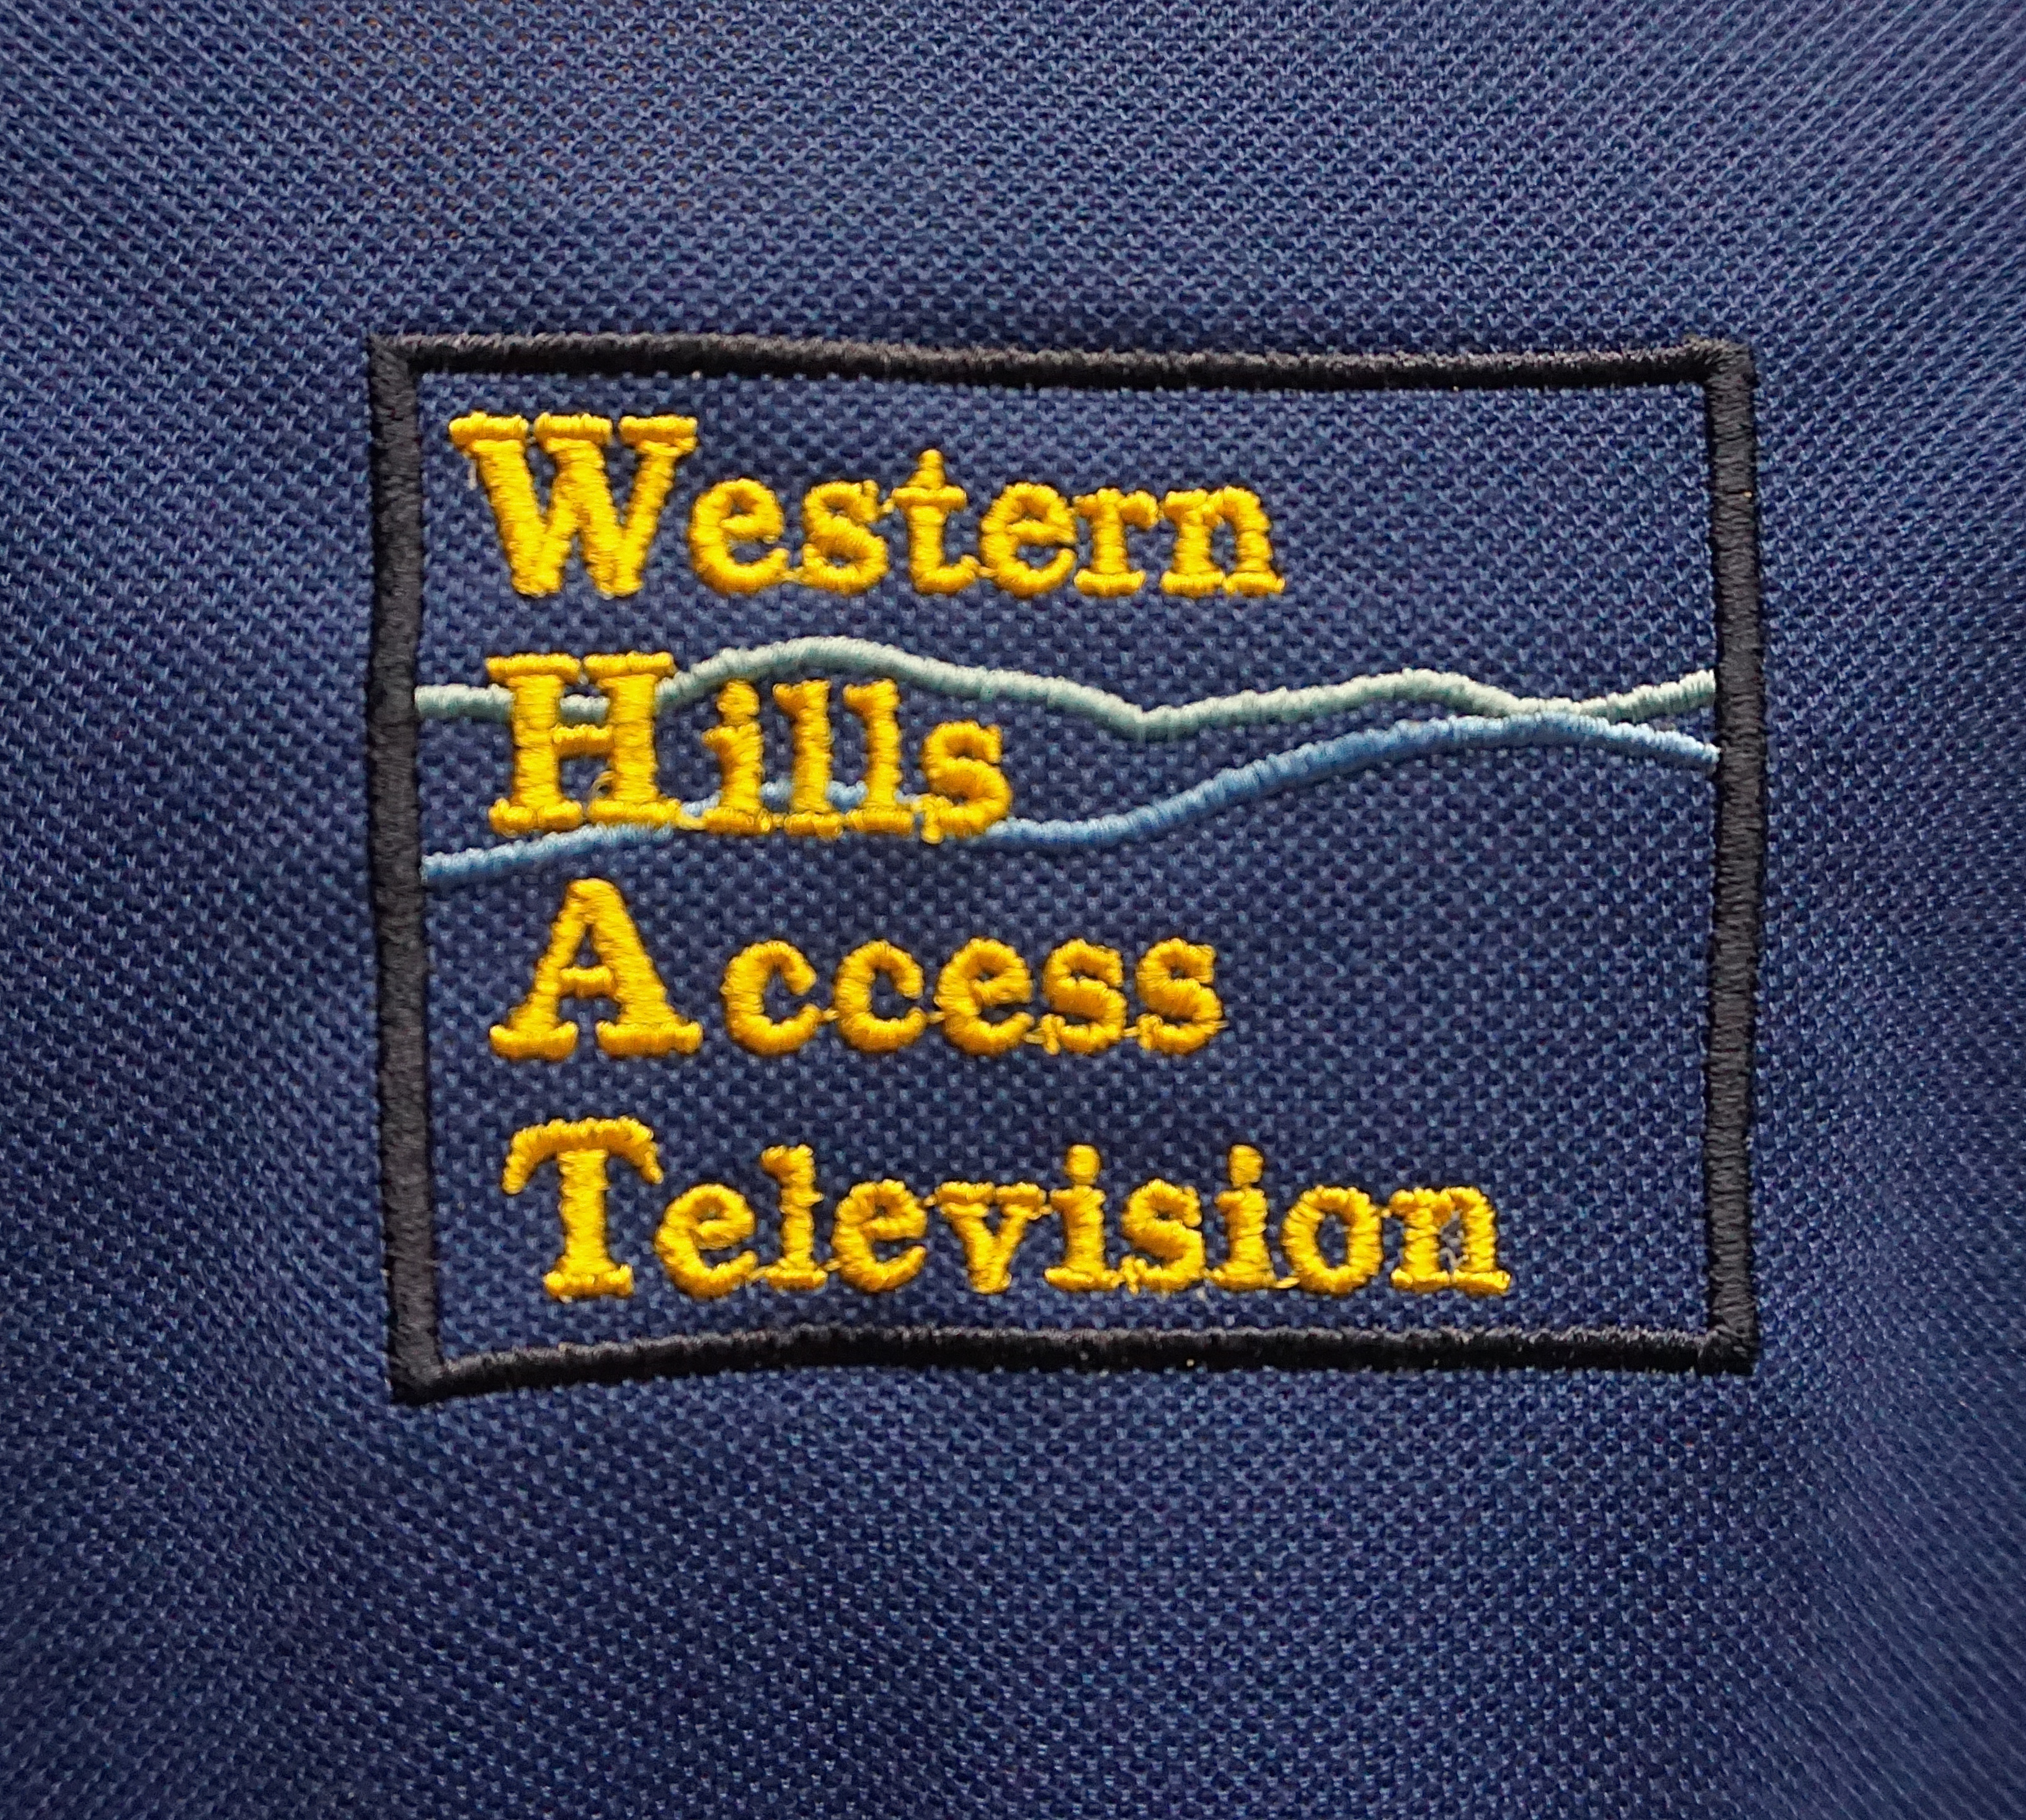 Western Hills Access Television - Western Hills Access Television - organization logo